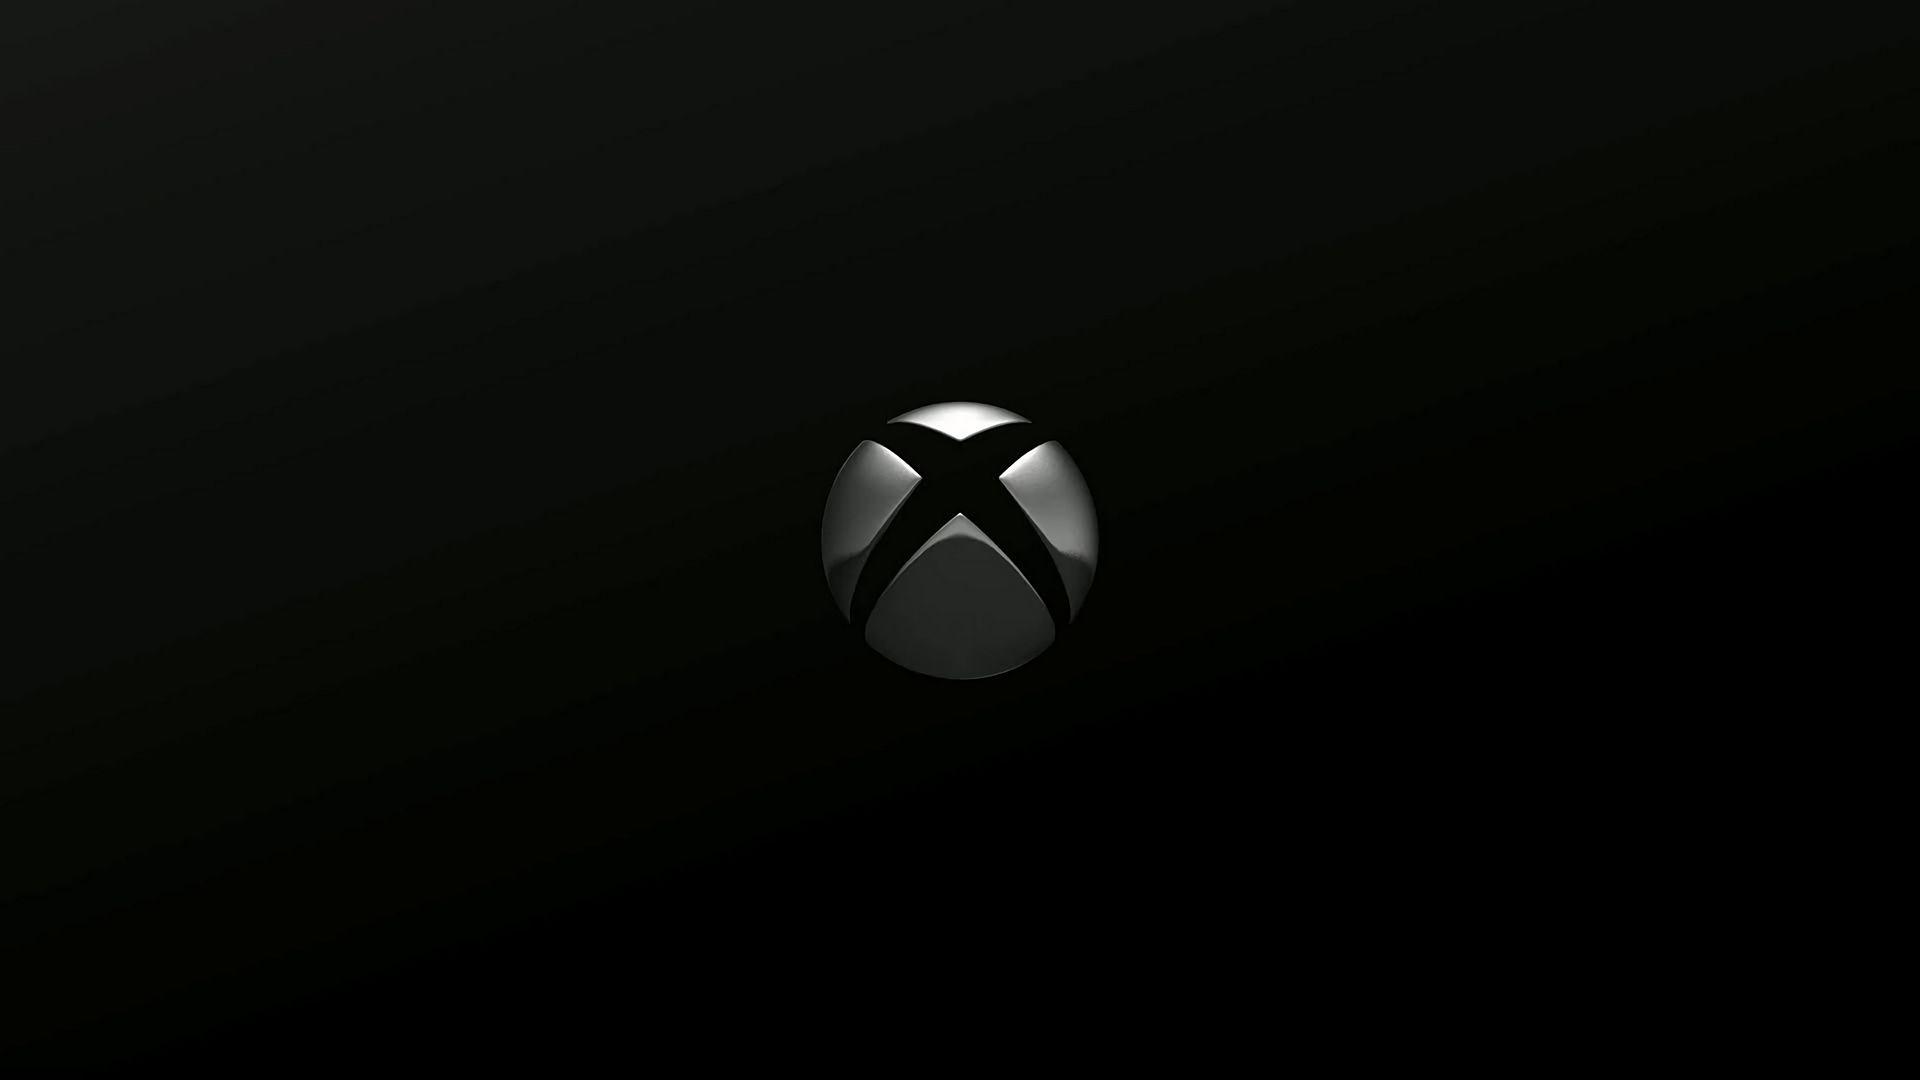 Xbox One Wallpaper, HDQ Beautiful Xbox One Image & Wallpaper